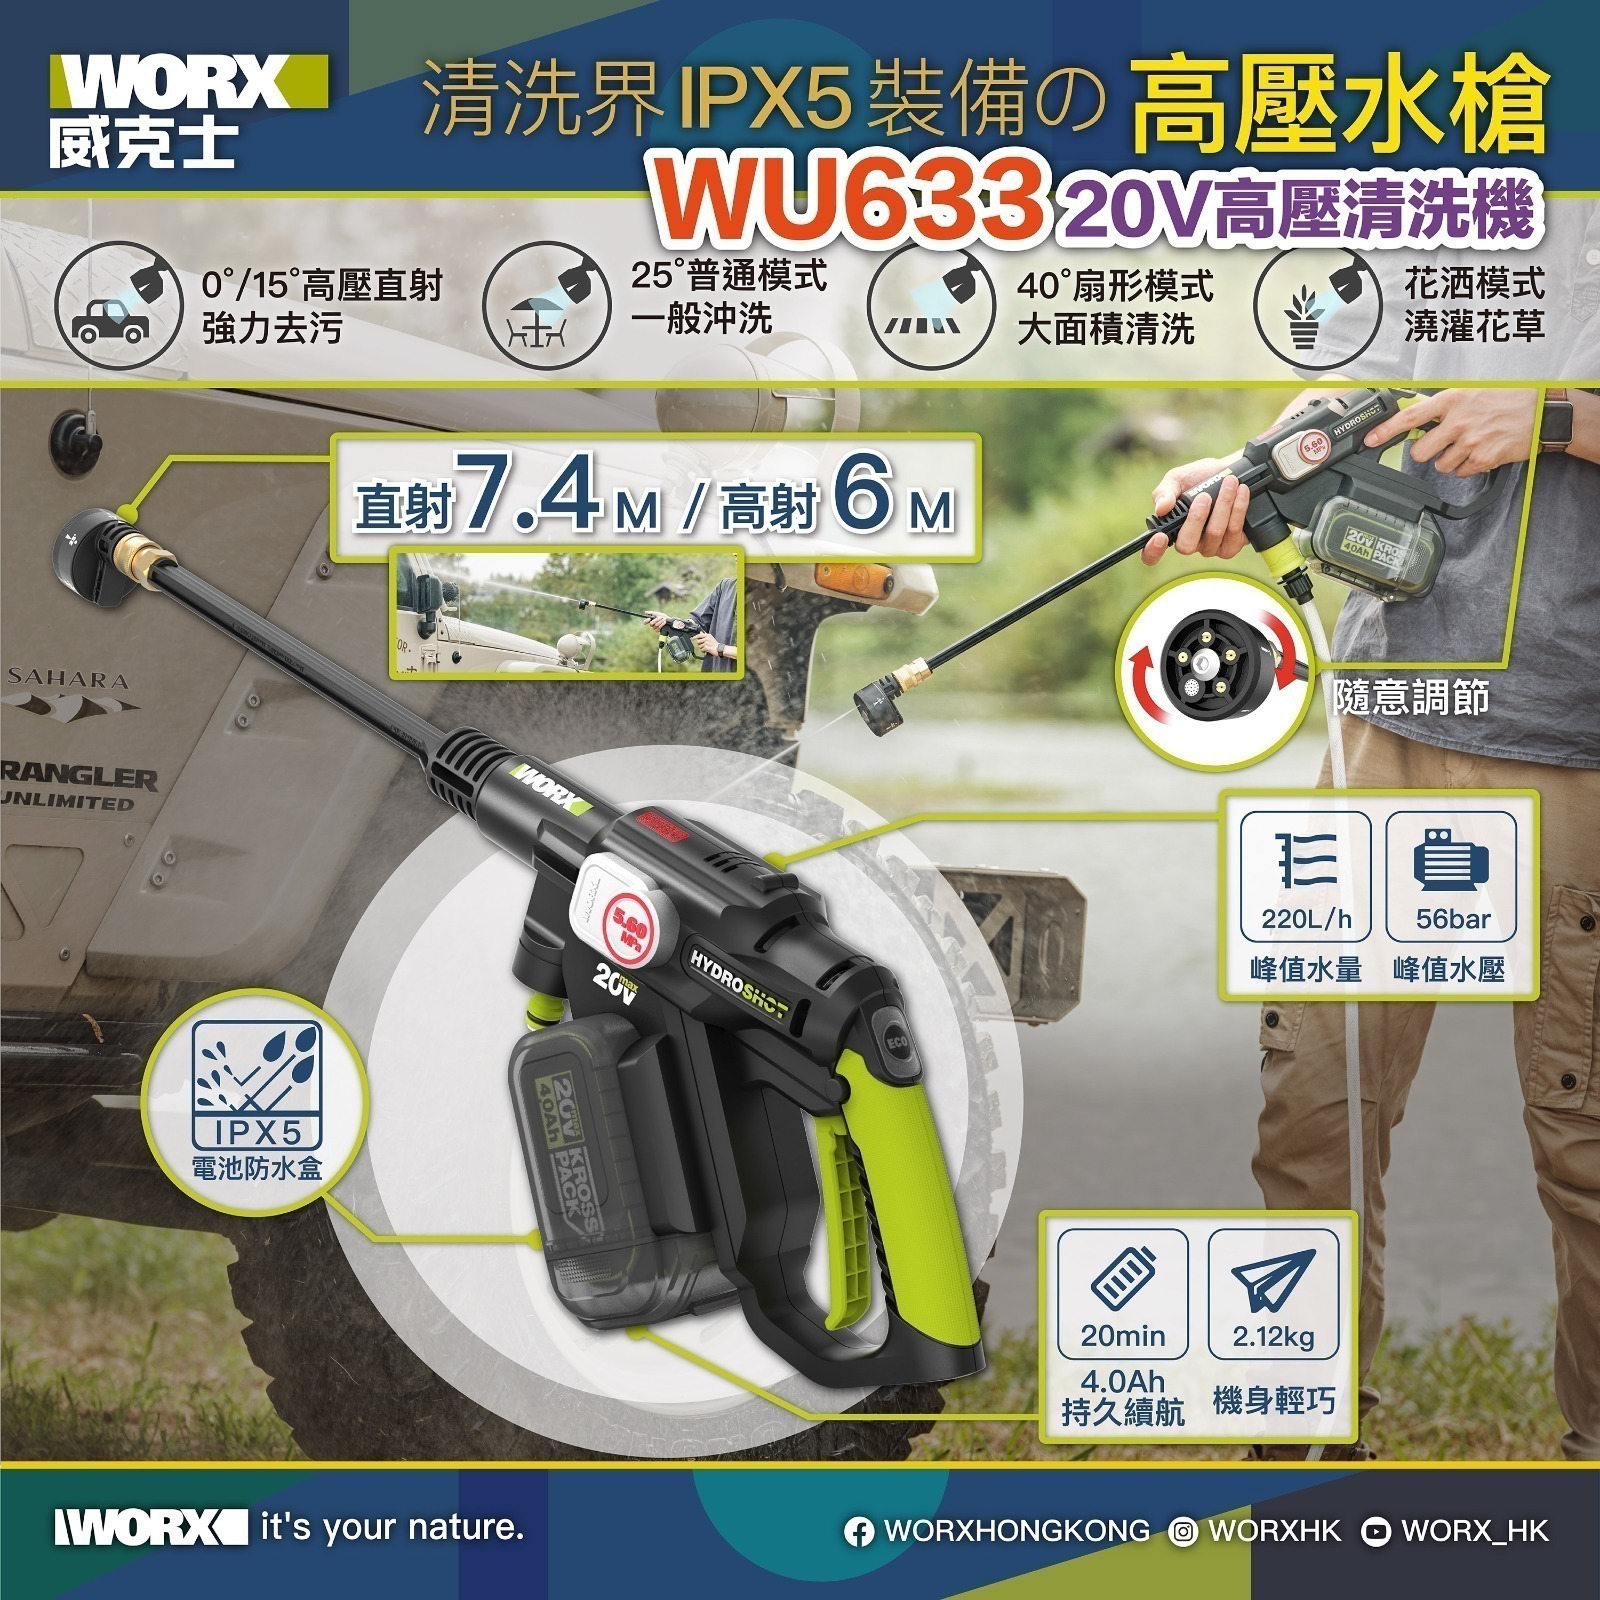 Worx HydroShot WG633E Review